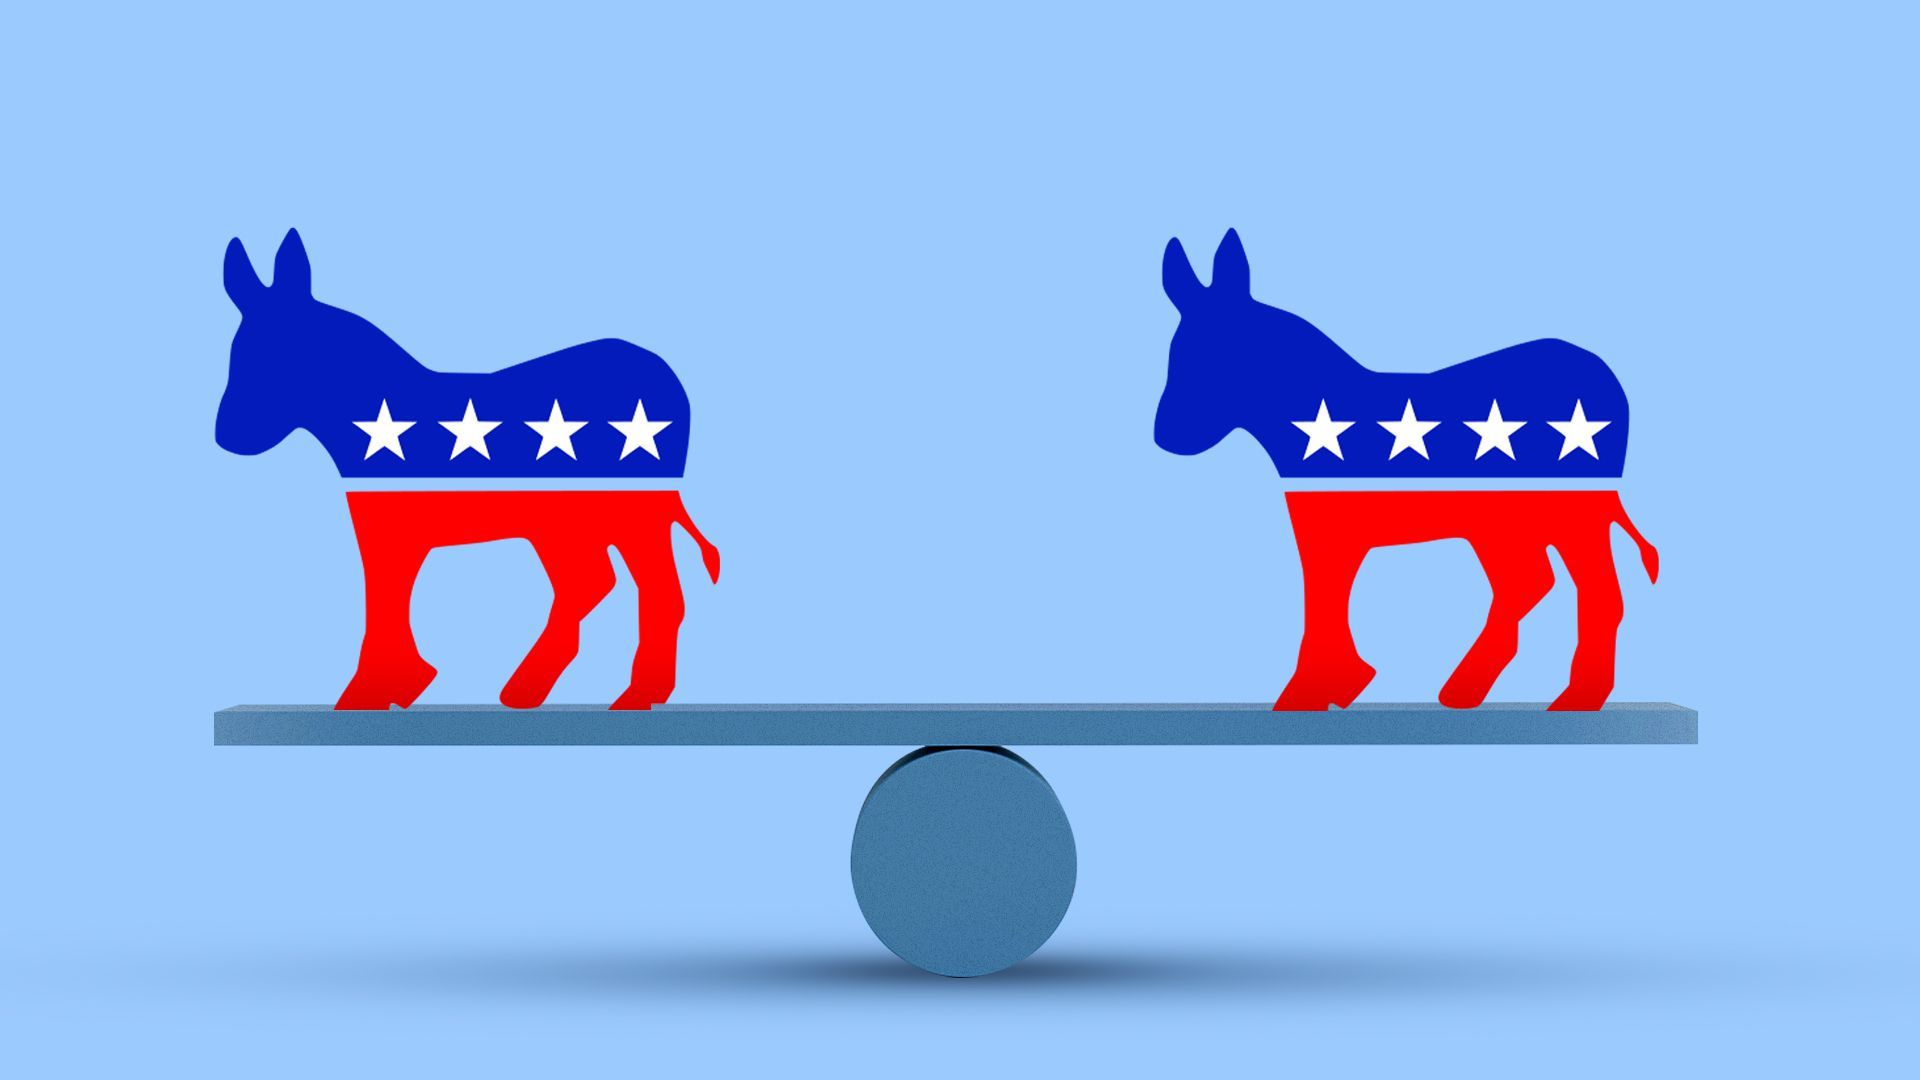 Illustration of 2 Democrat donkeys on either side of a balance